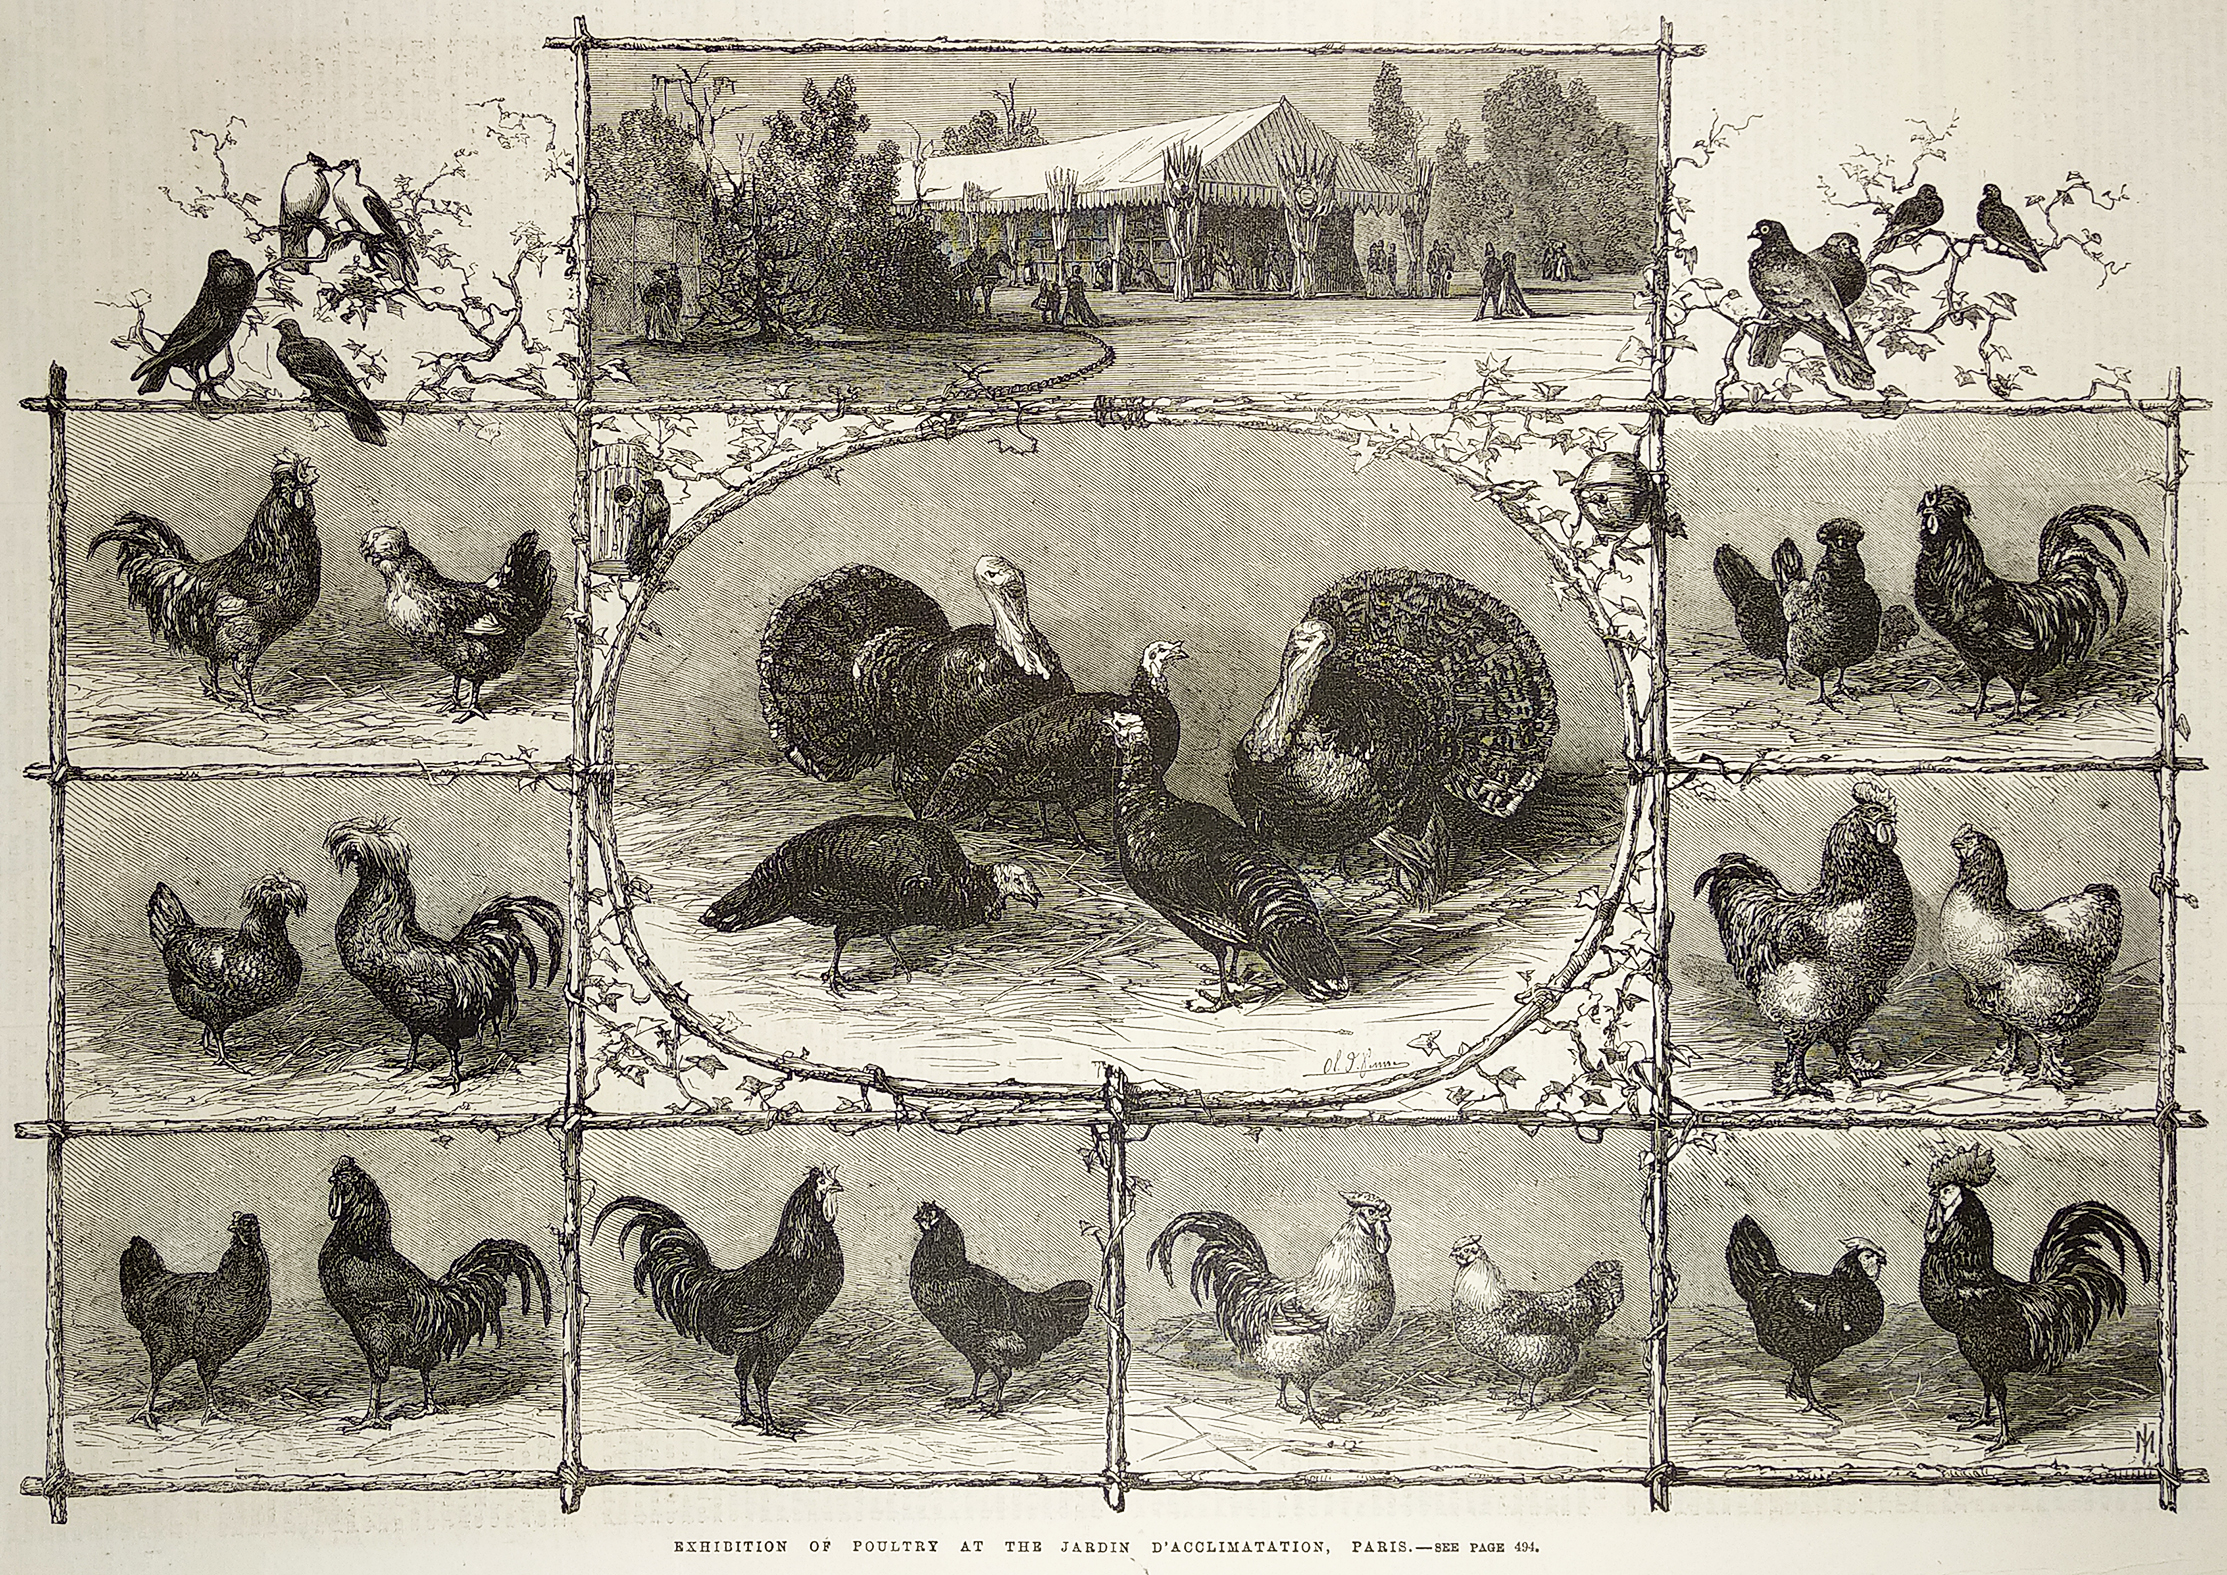 Exhibition of Poultry at the Jardin D'Acclimatatio, Paris. - Antique Print from 1868